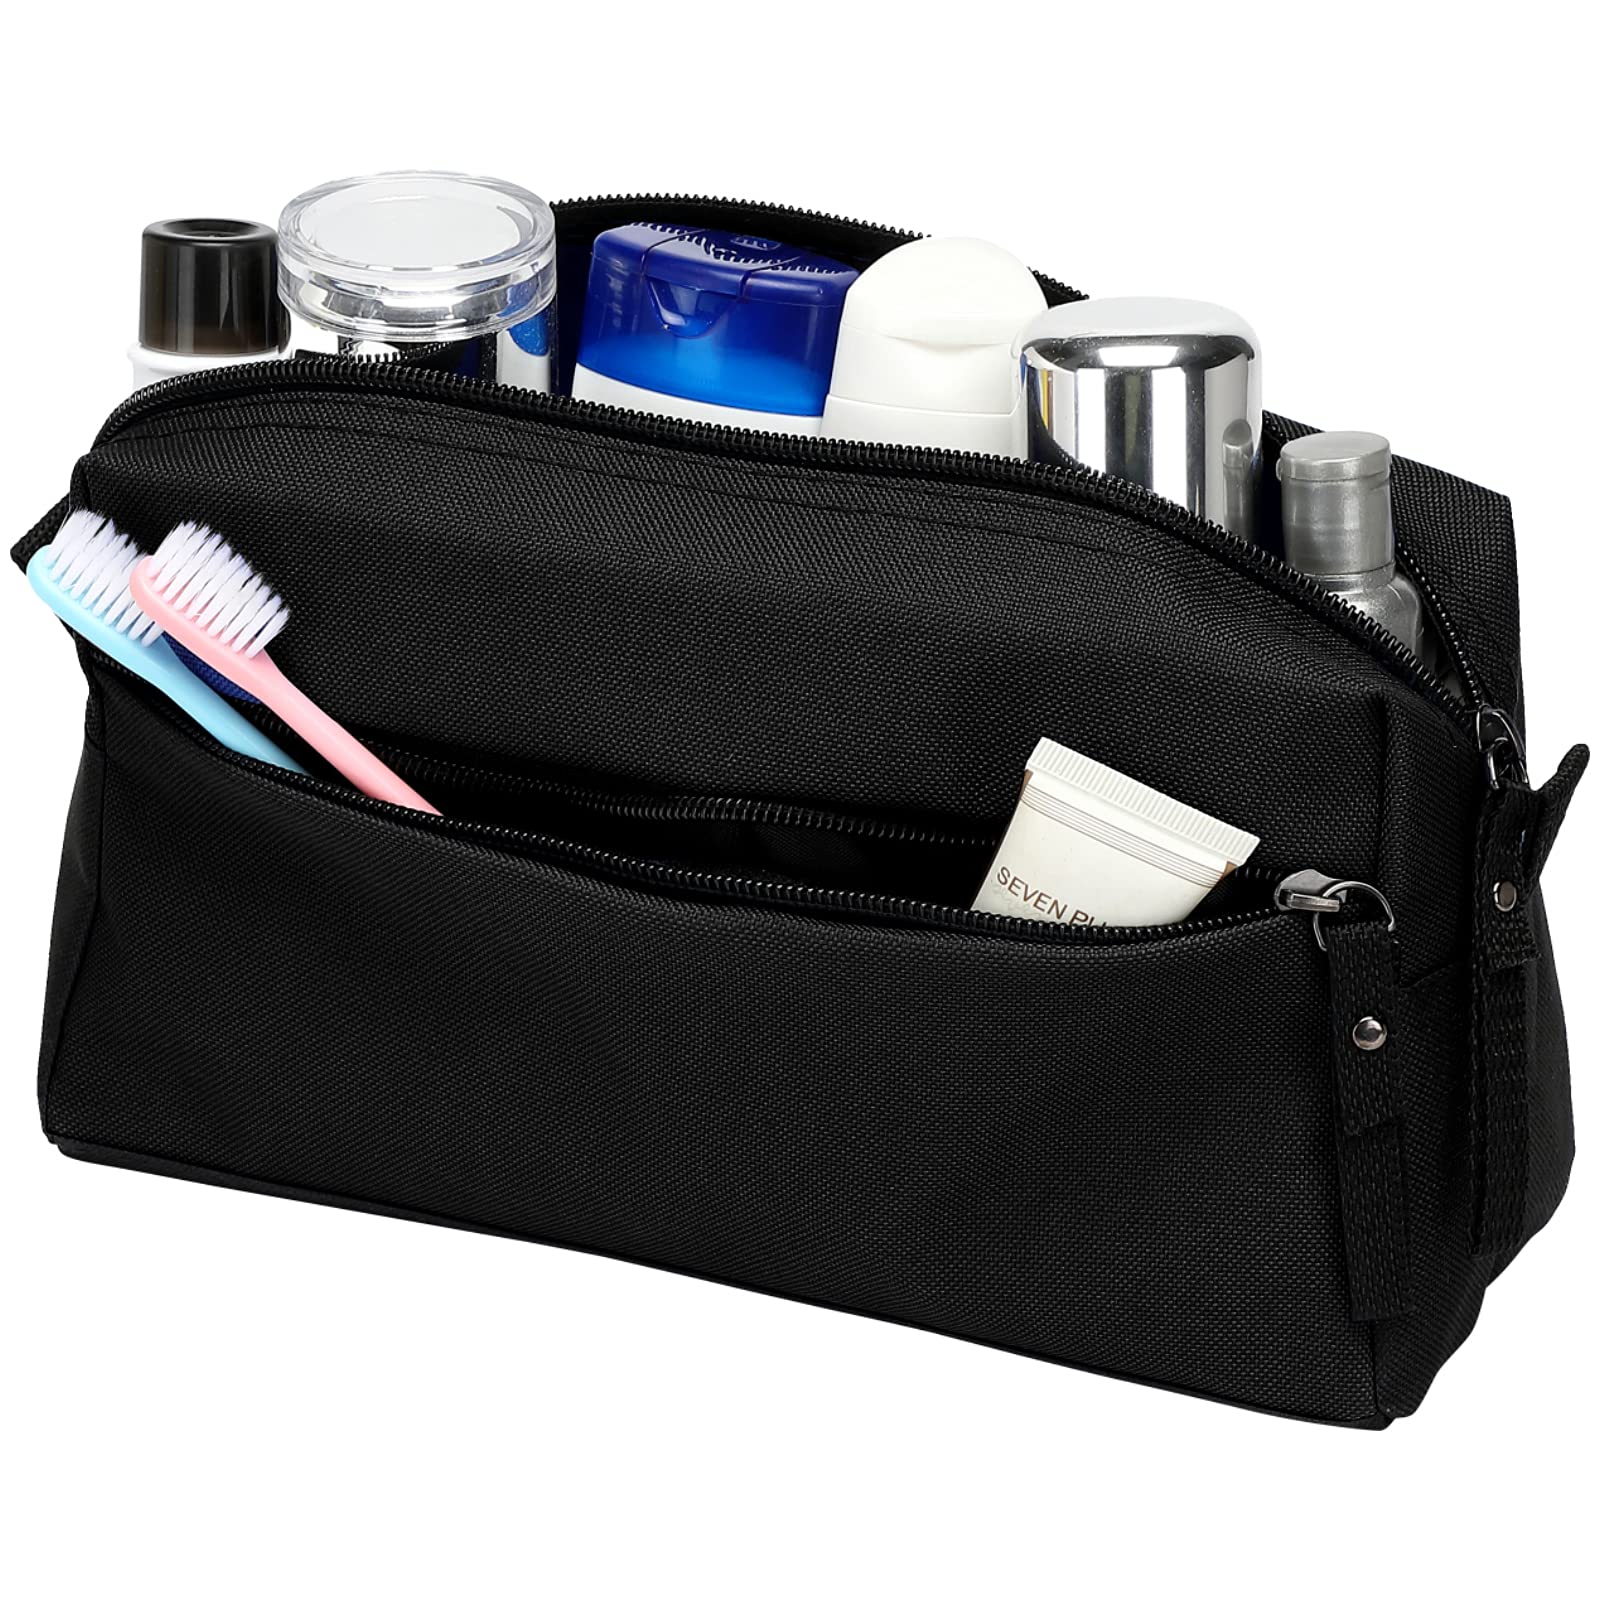 BuyAgain Toiletry Bag, Toiletry Travel Bathroom Bag Waterproof Cosmetic Make up Pouch Dopp Kit For Men or Women, Black